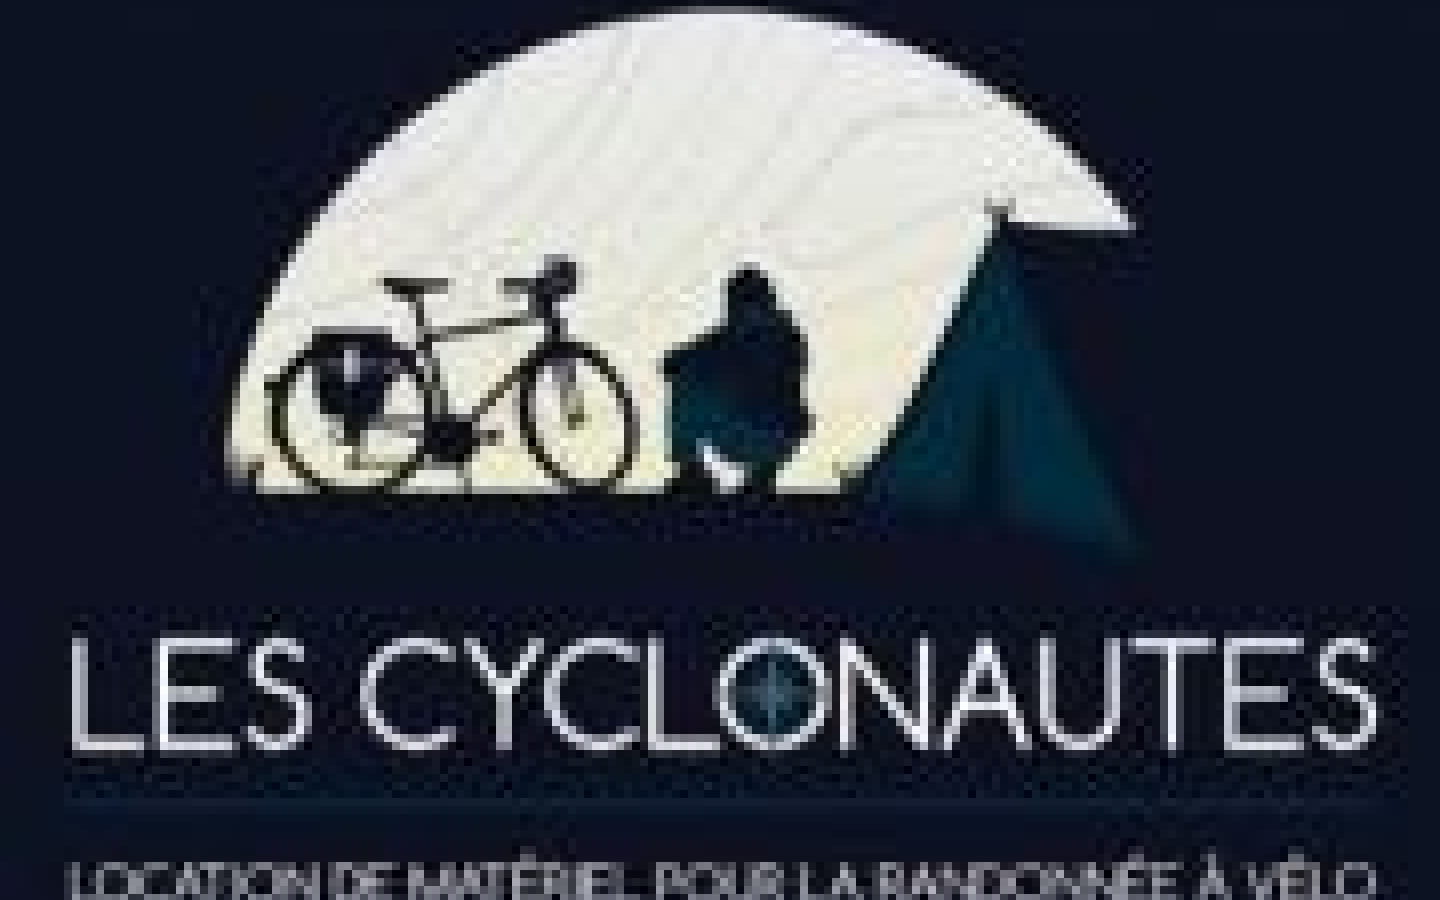 Les Cyclonautes